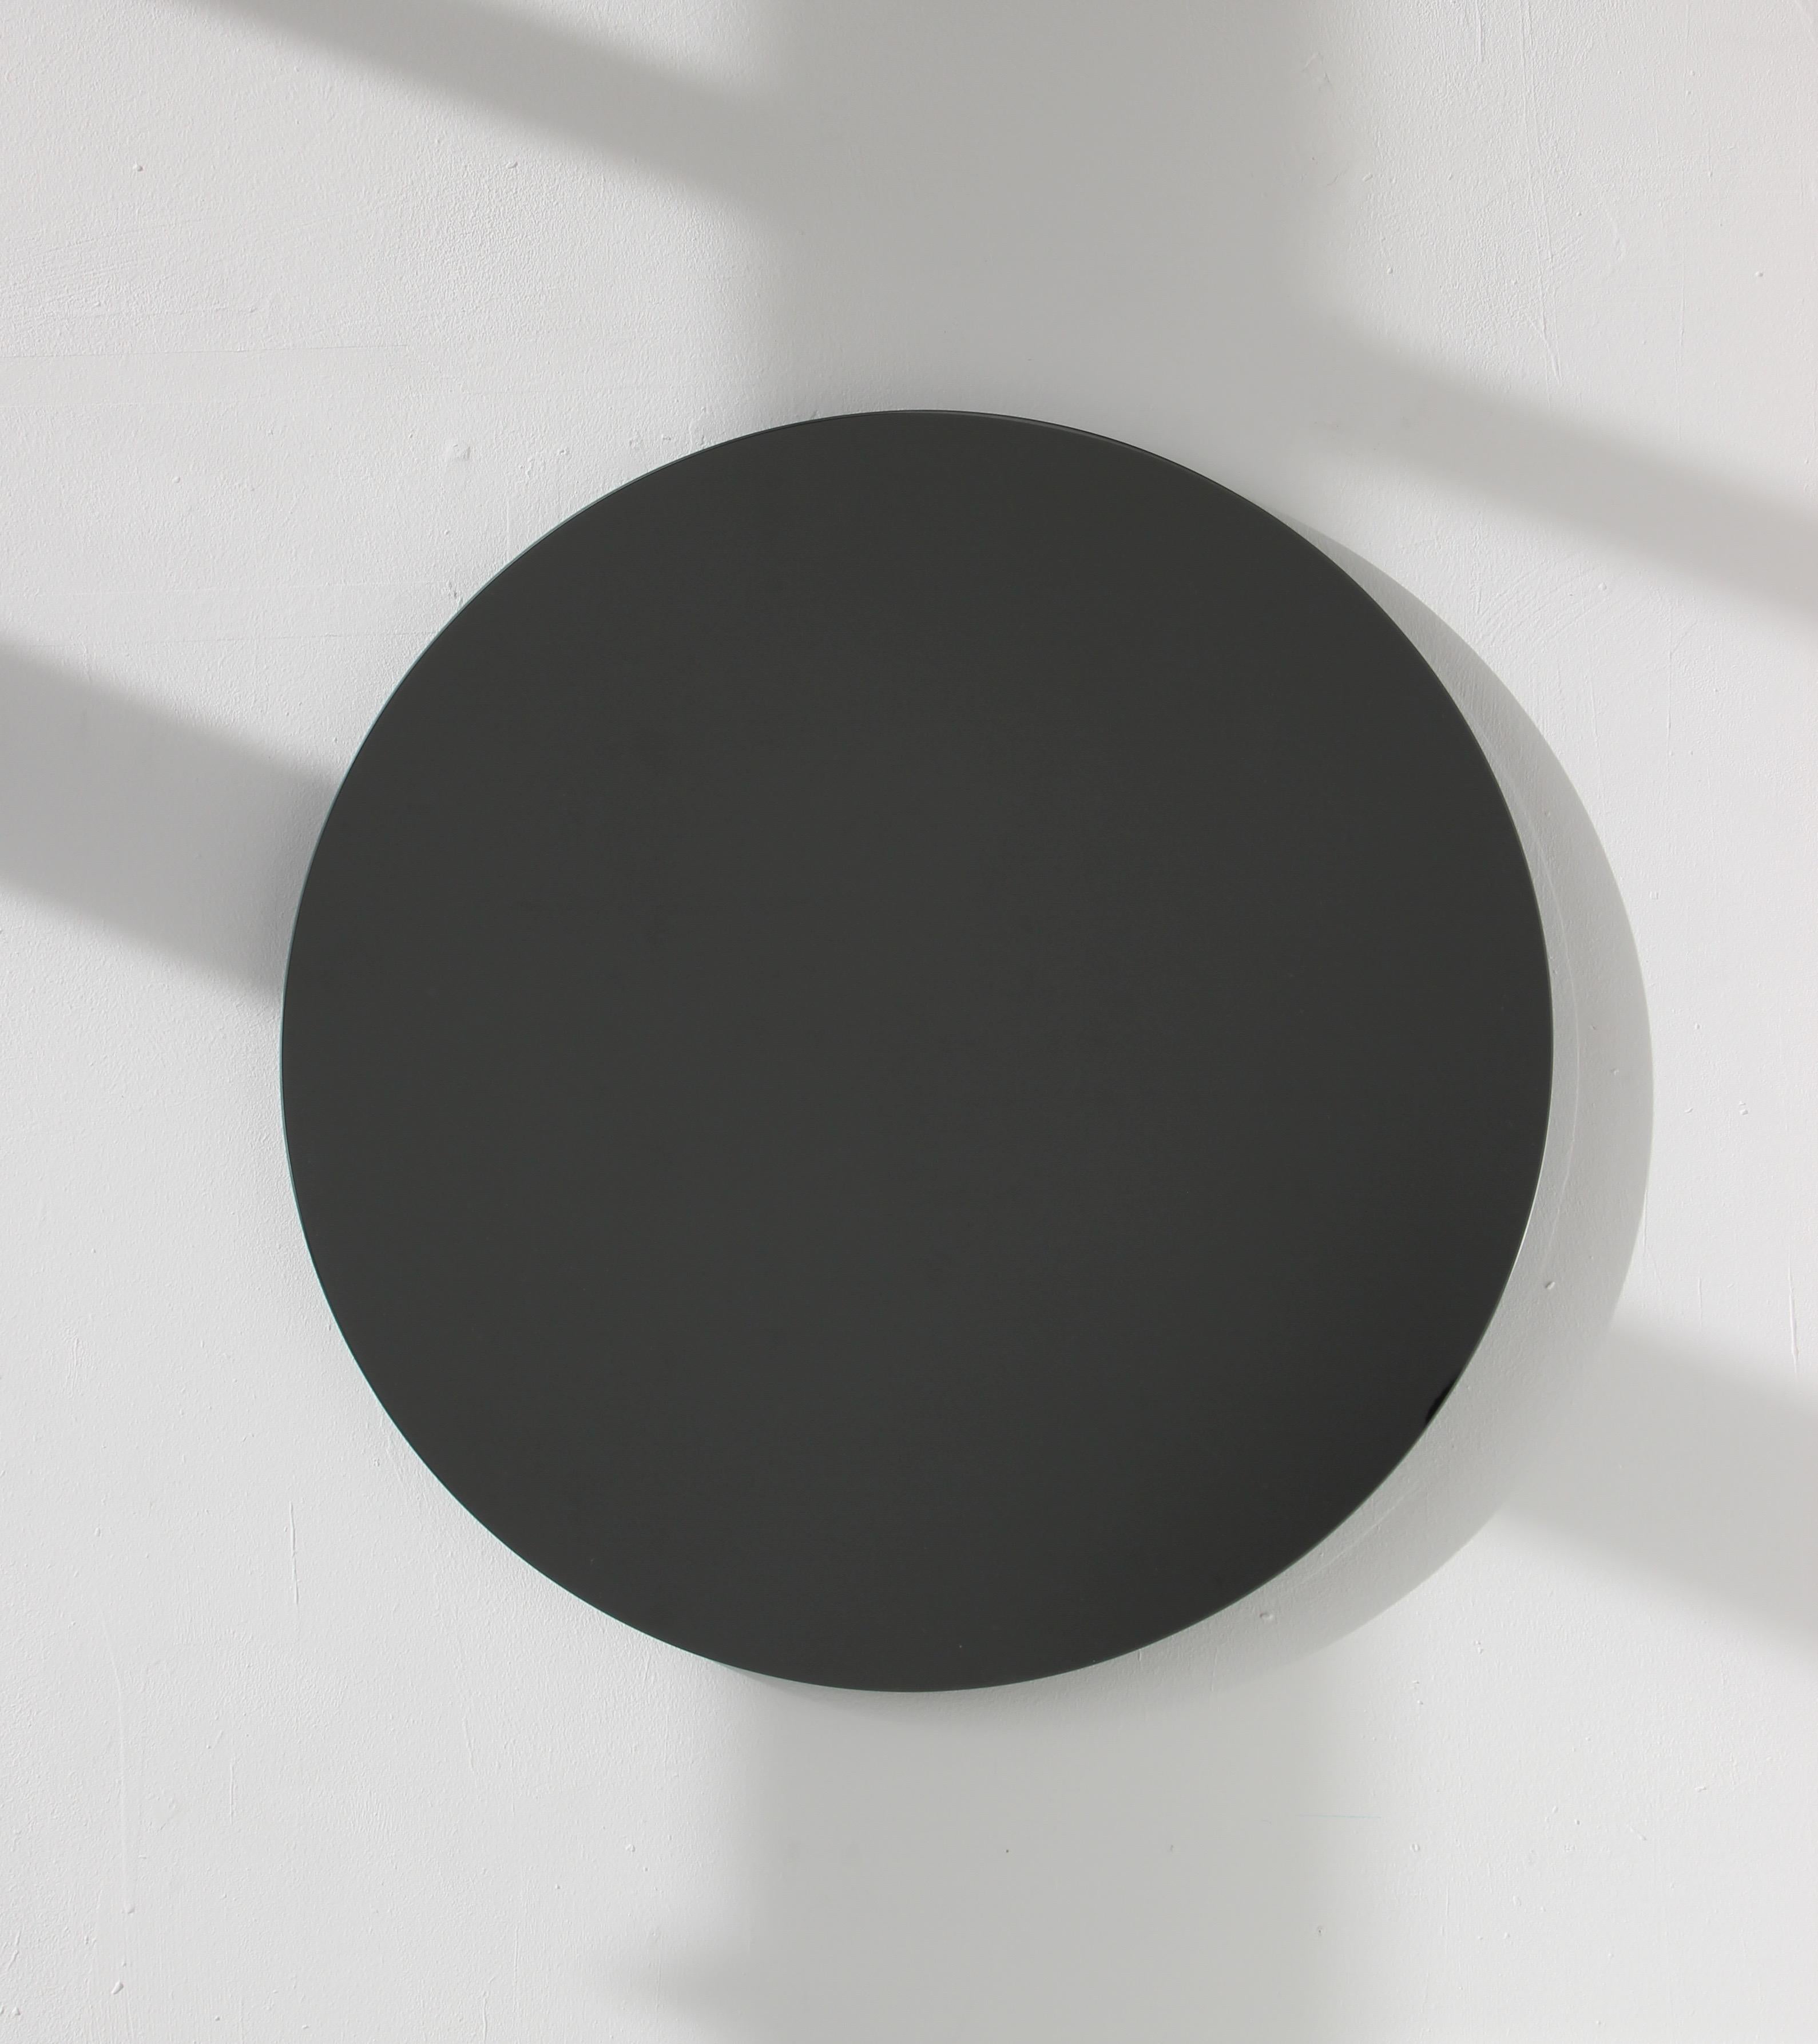 Britannique Orbis Black Tinted Round Frameless Modern Mirror with Floating Effect, Medium (Miroir rond sans cadre à effet flottant, noir) en vente